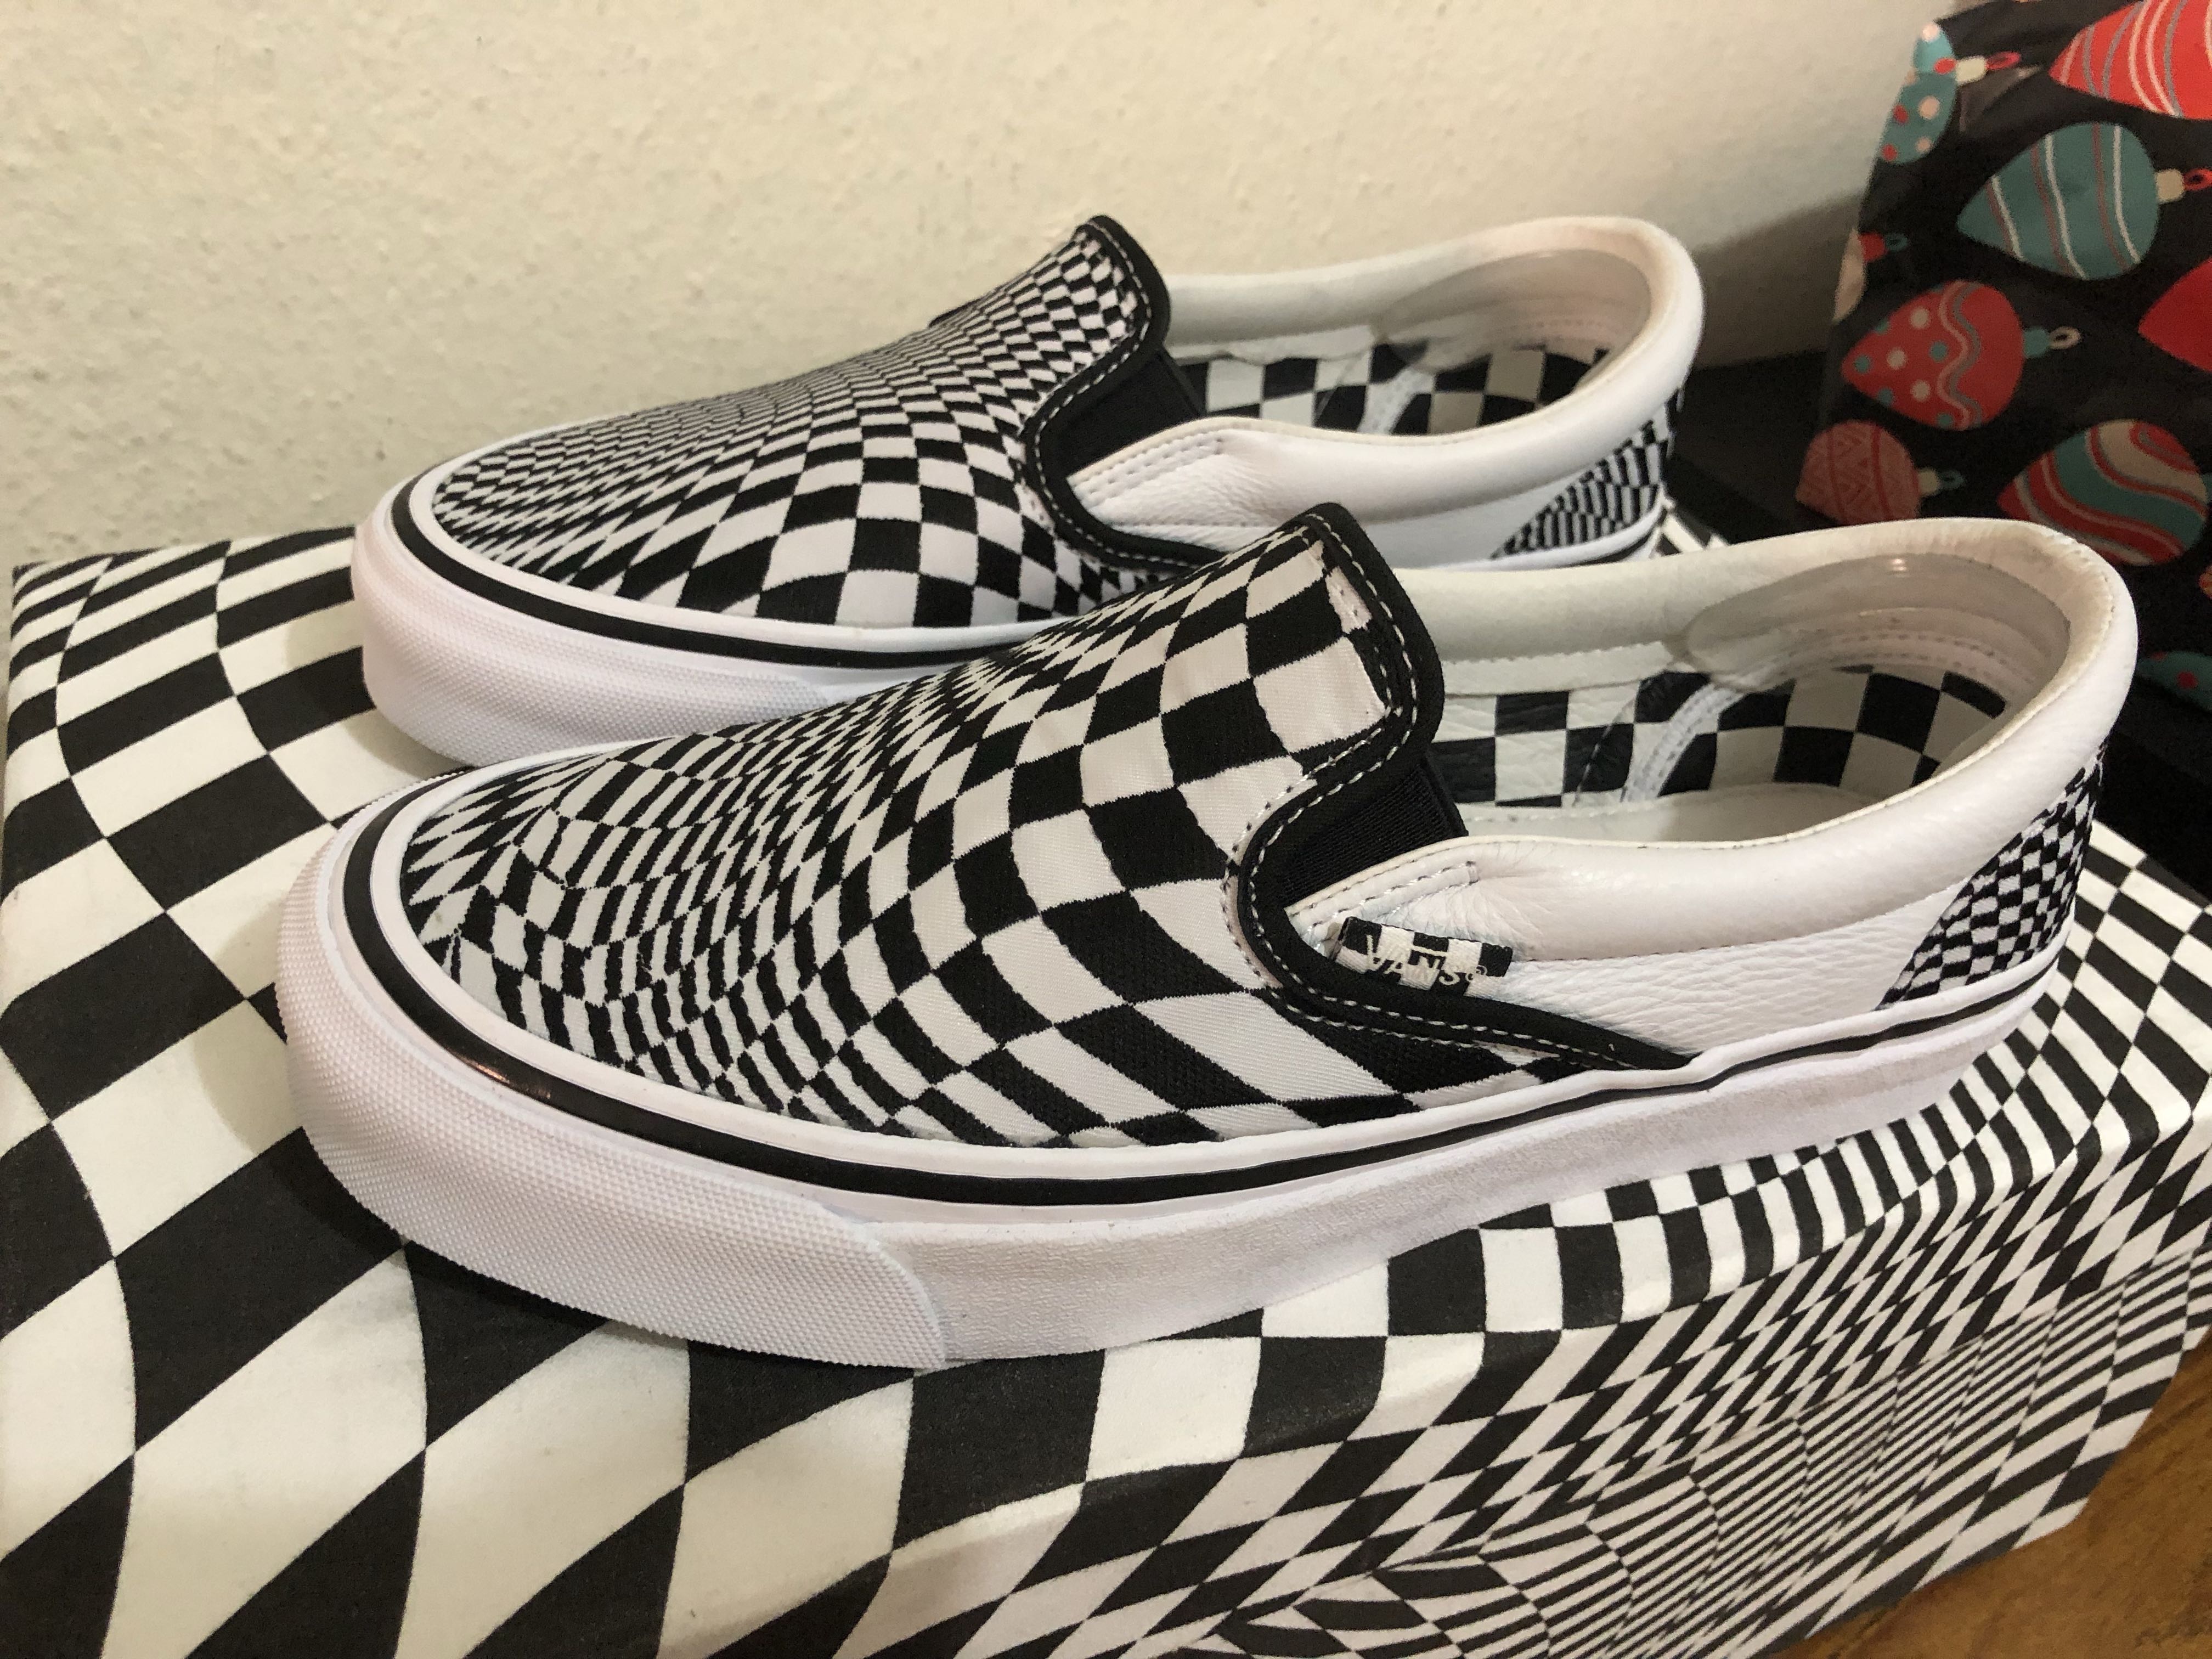 dizzy checkerboard vans